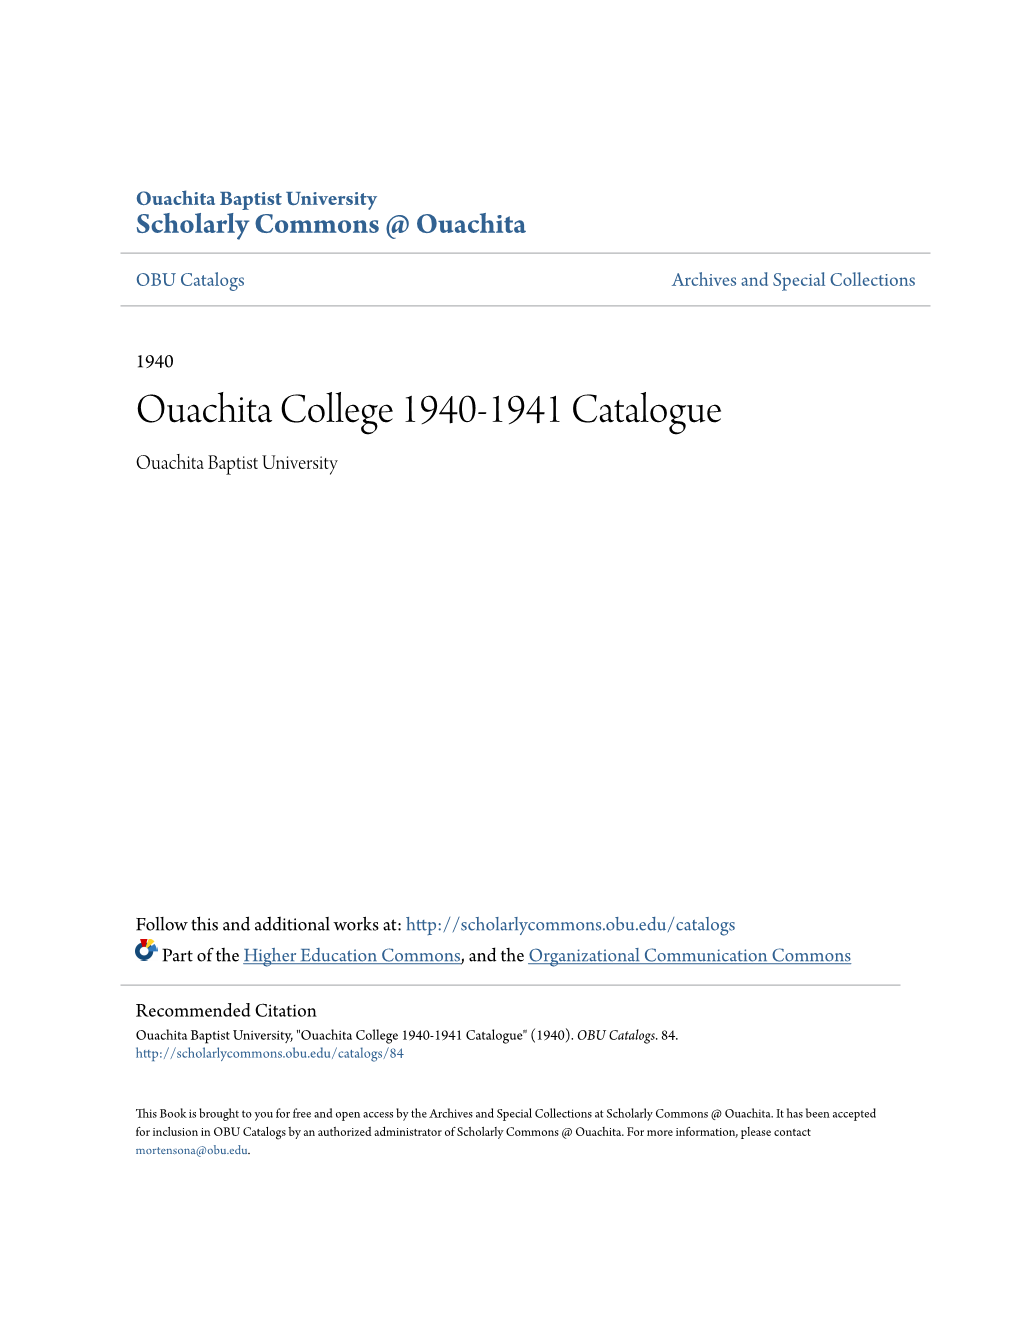 Ouachita College 1940-1941 Catalogue Ouachita Baptist University